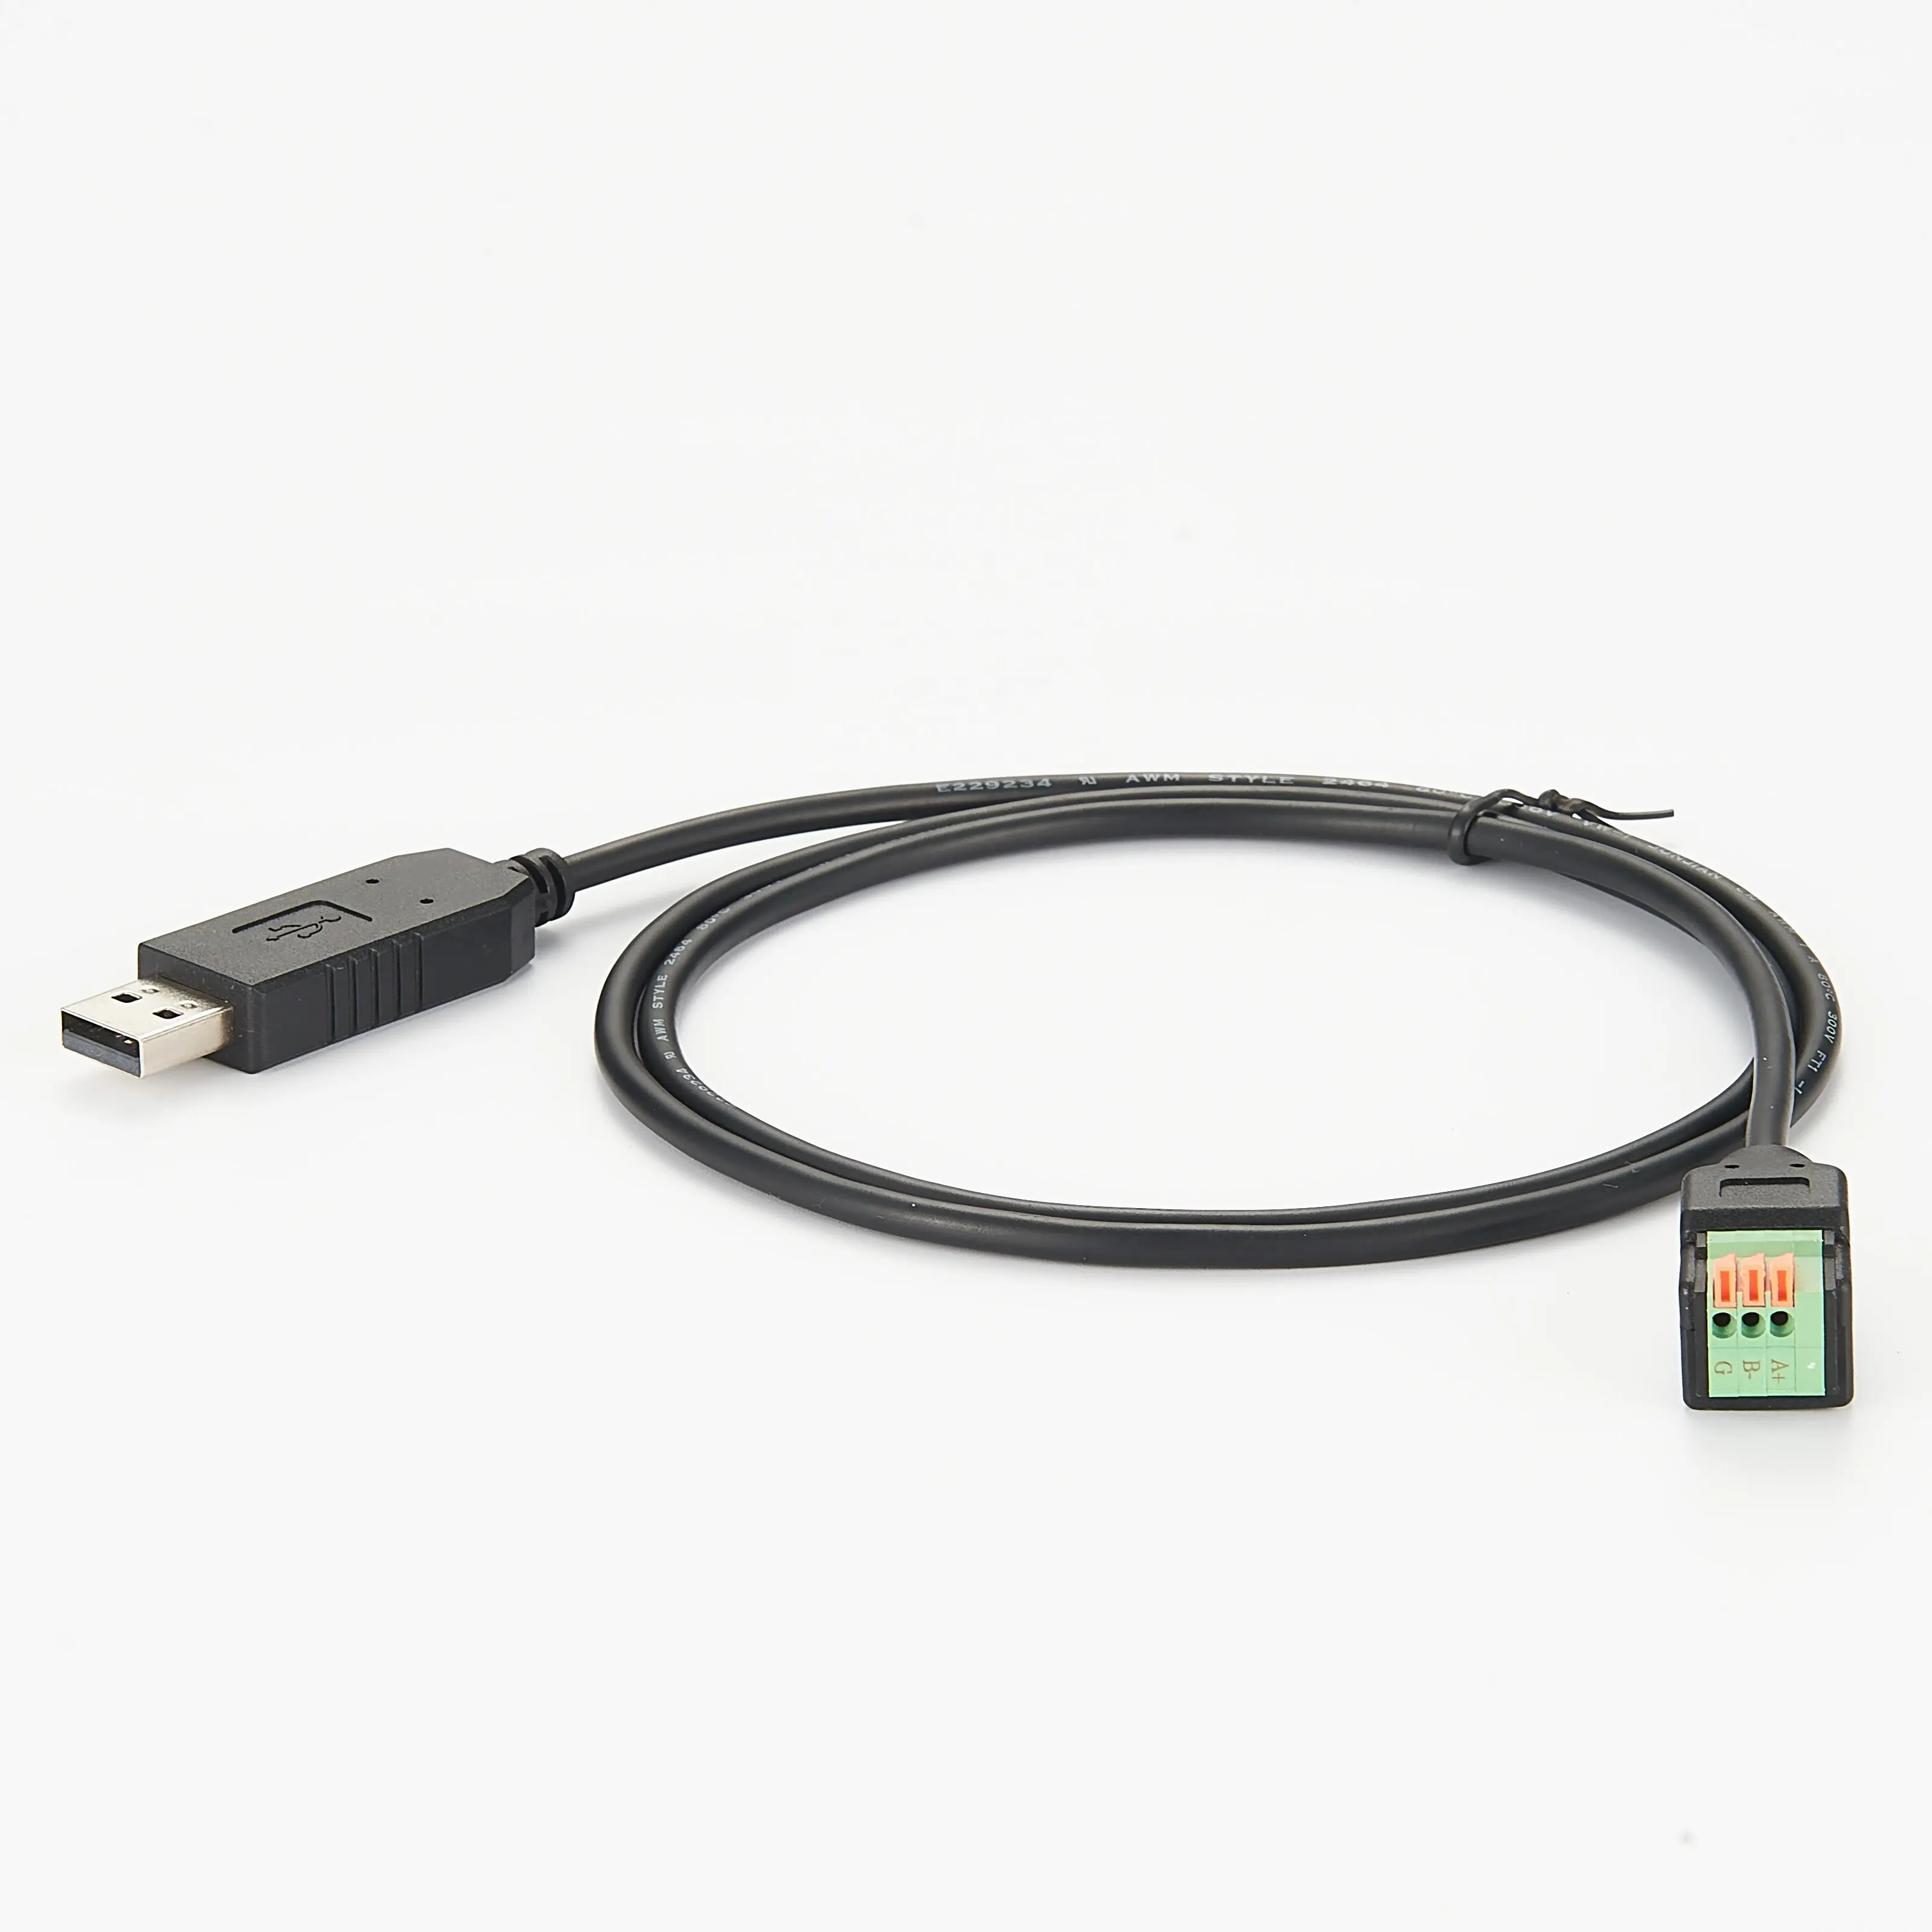 USB to RS-485 Adapter Terminal Block FTDI chip inside